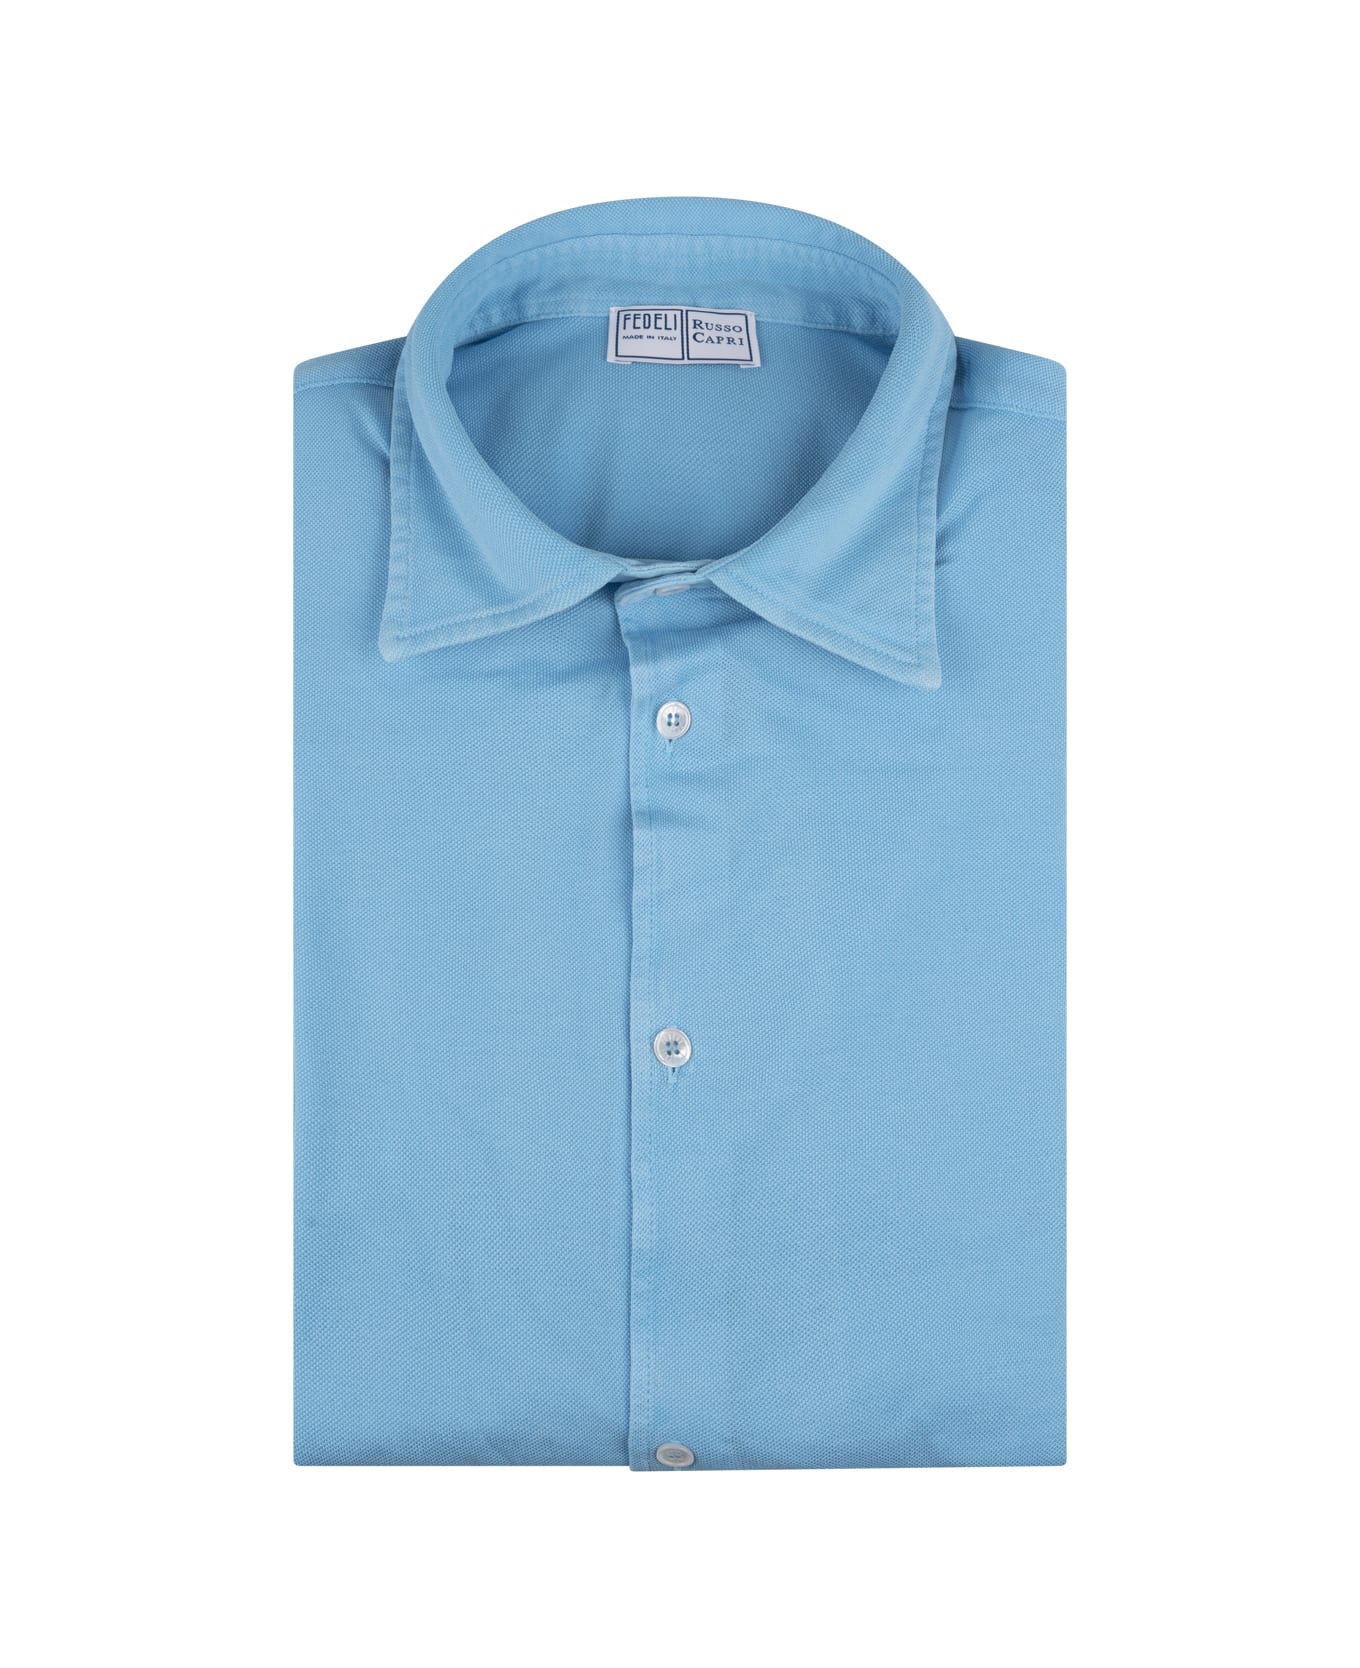 Fedeli Teorema Shirt In Sky Blue Cotton Piqué - Blue シャツ